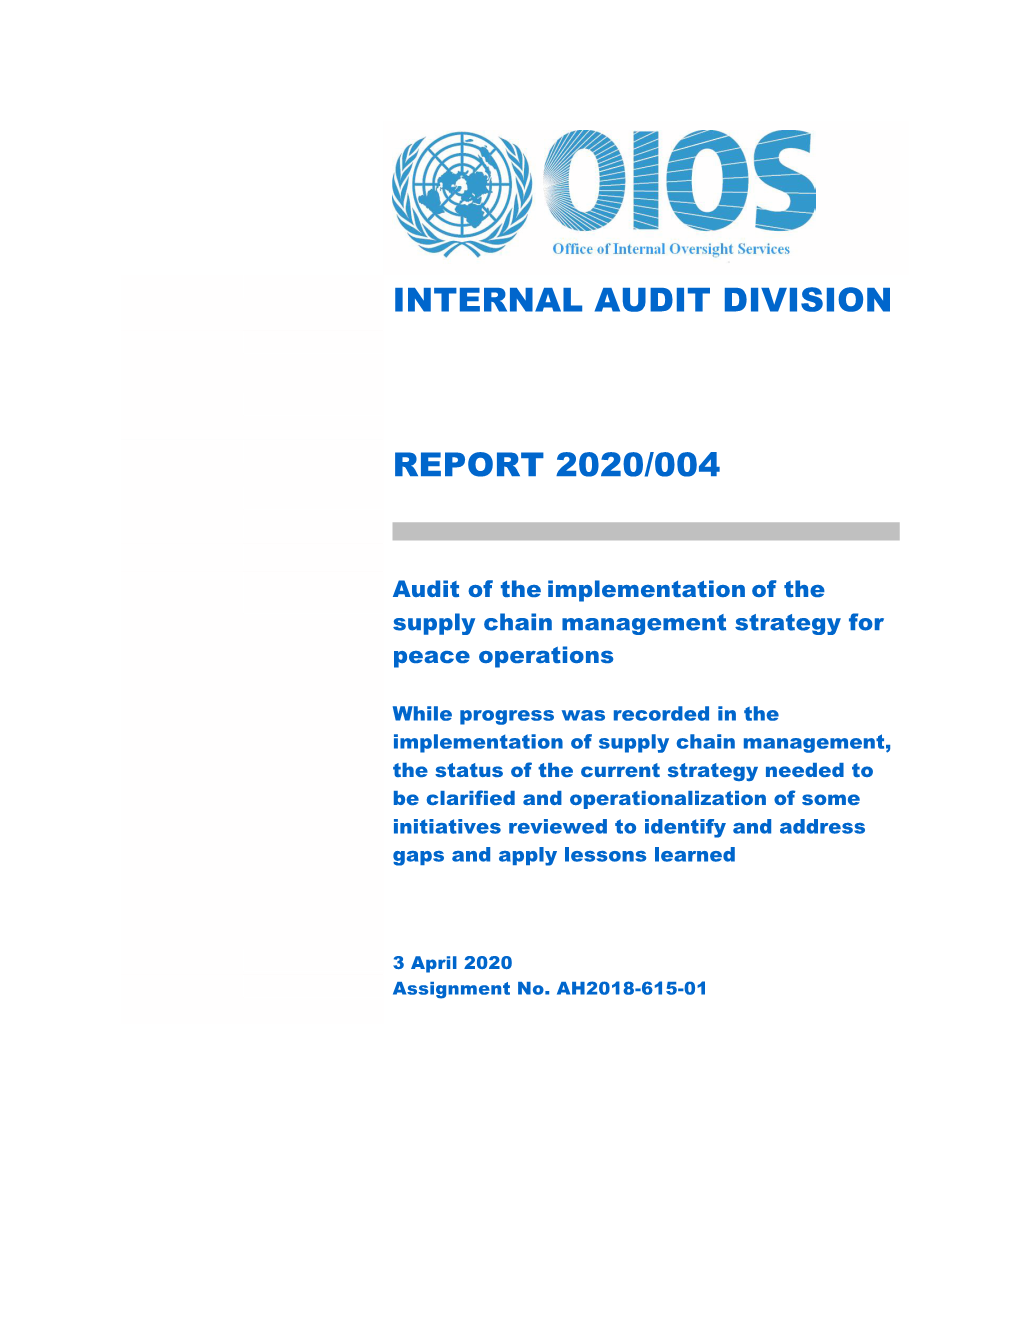 Internal Audit Division Report 2020/004